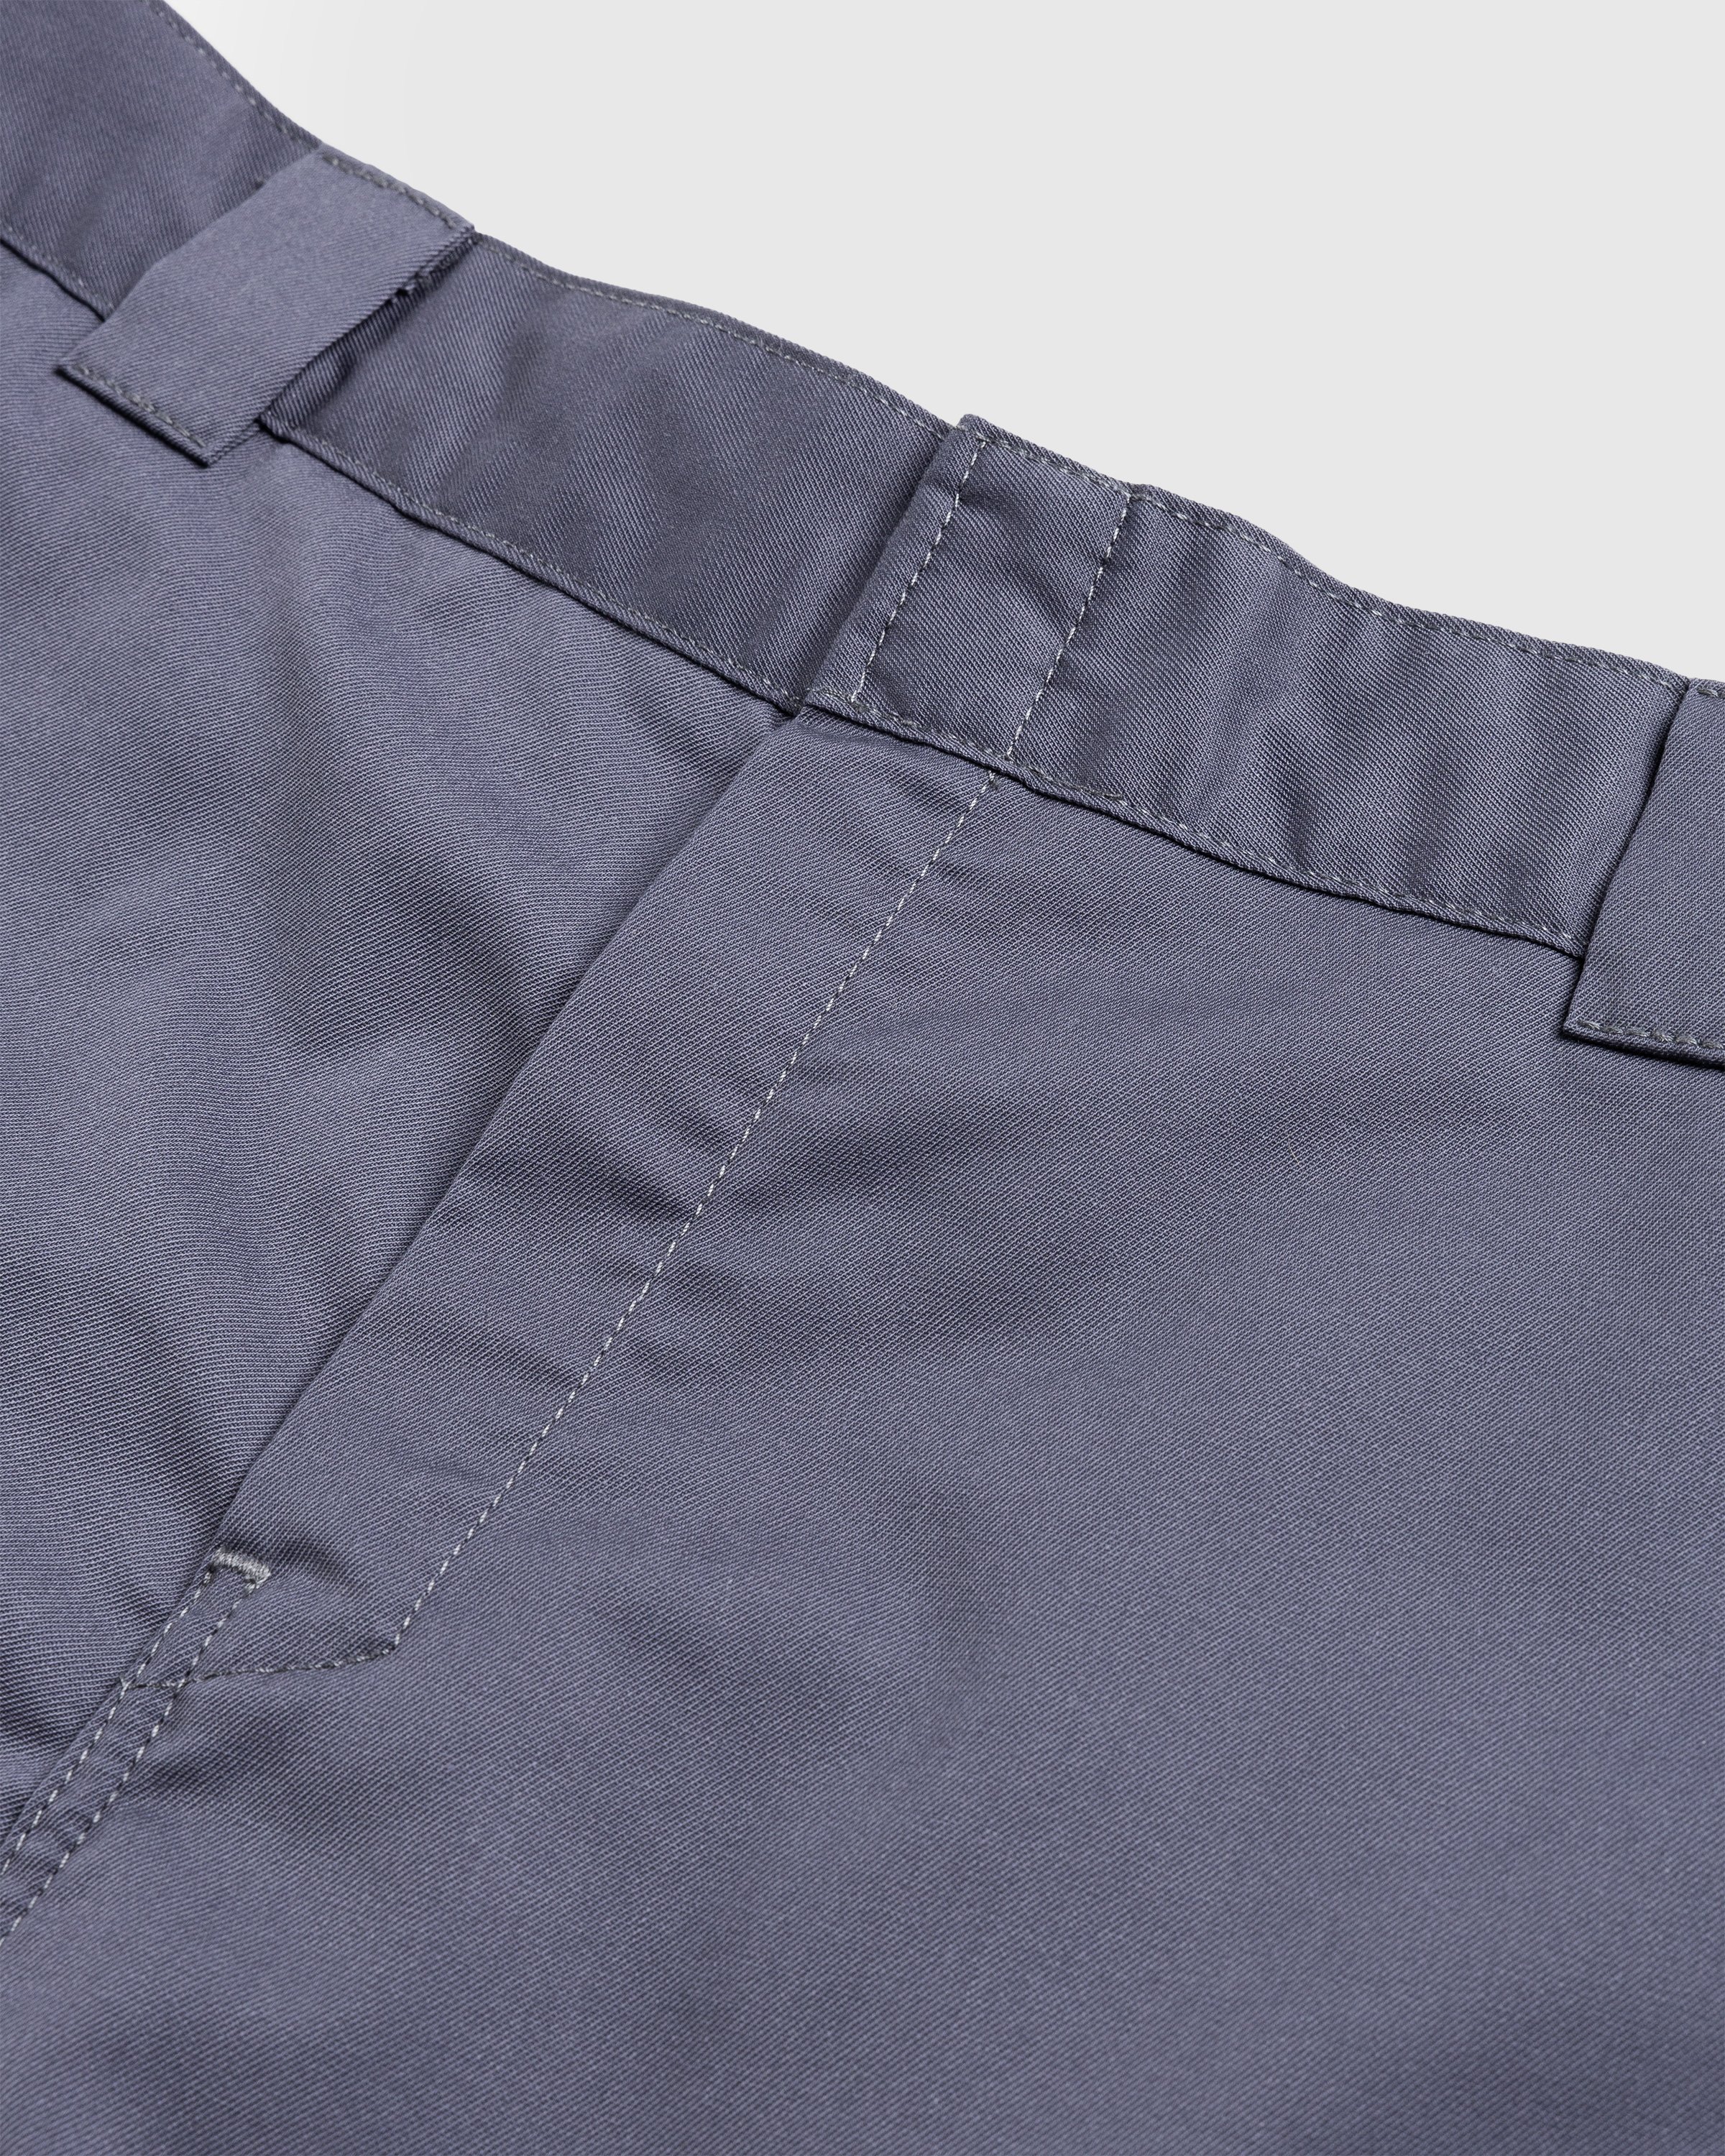 Carhartt WIP - Craft Short Grey - Clothing - Green - Image 4